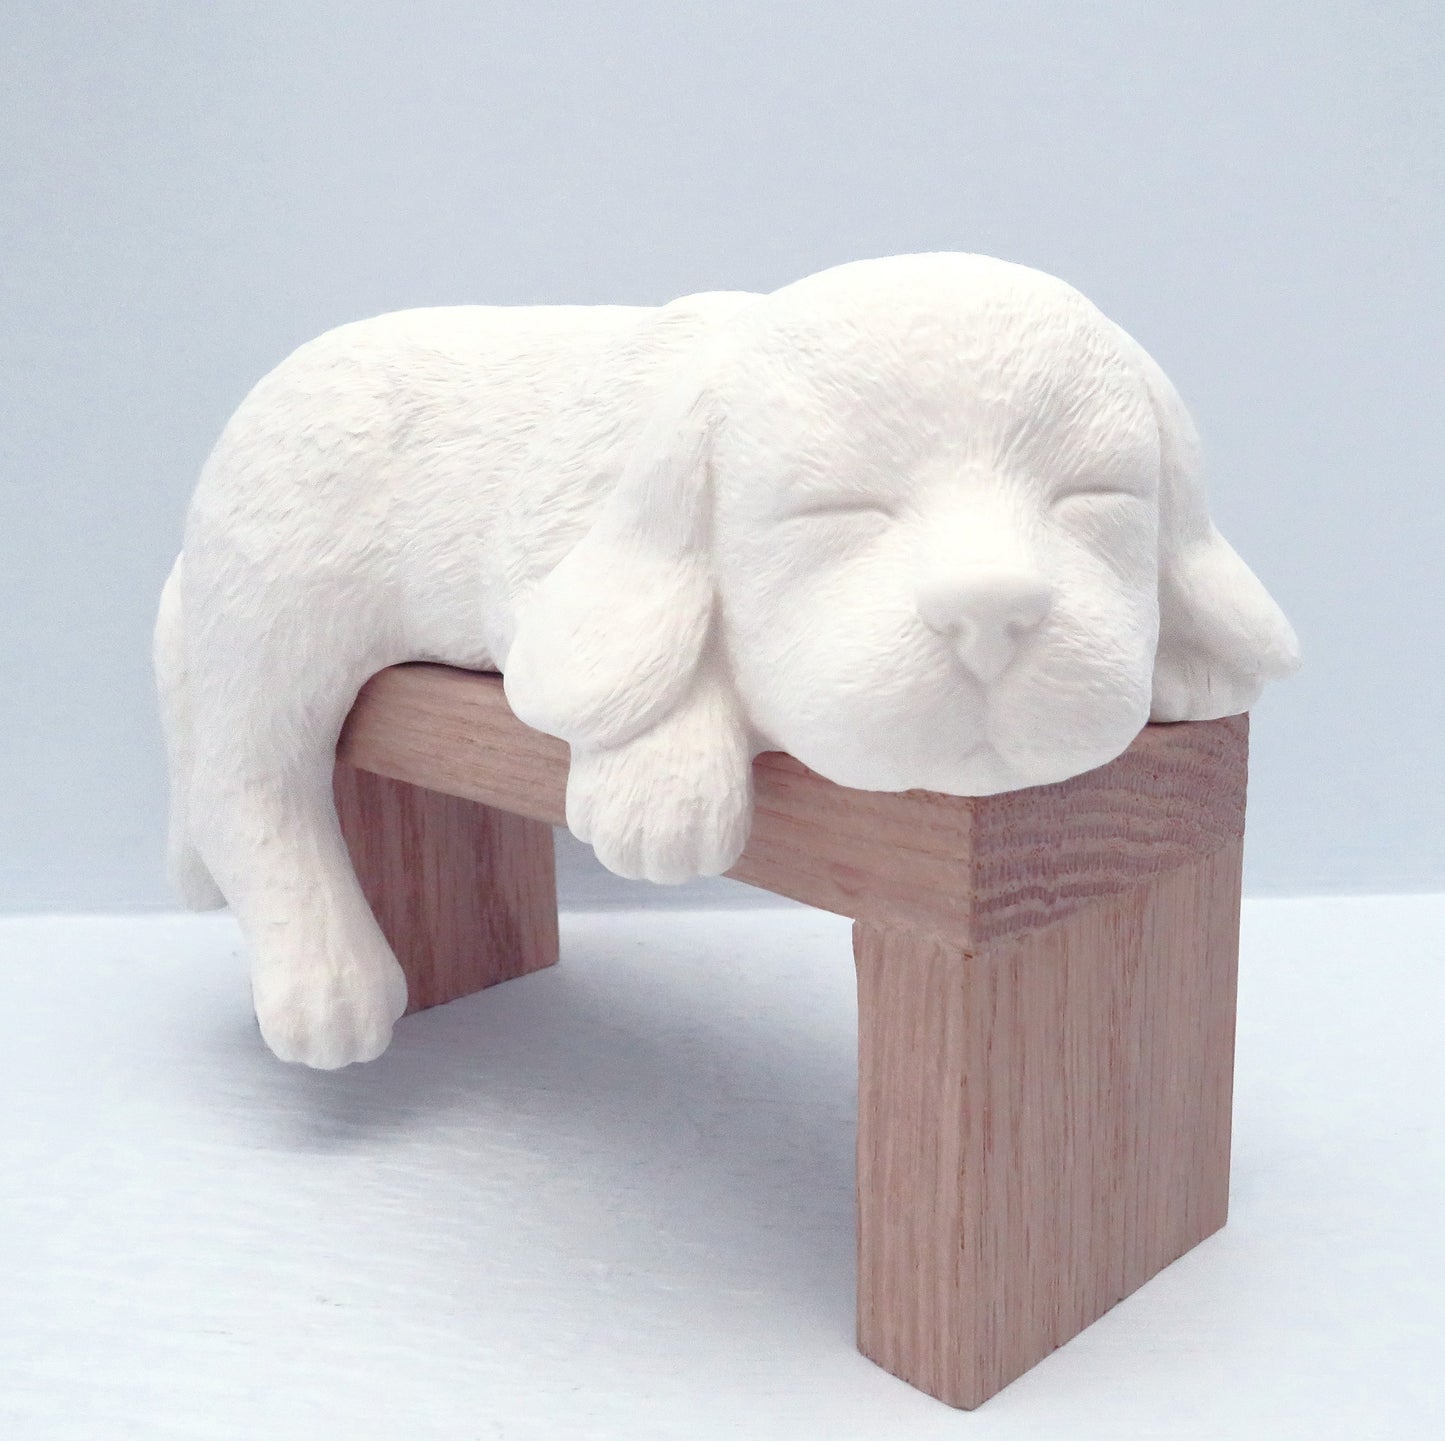 unpainted ceramic dog figurine on pedestal facing camera